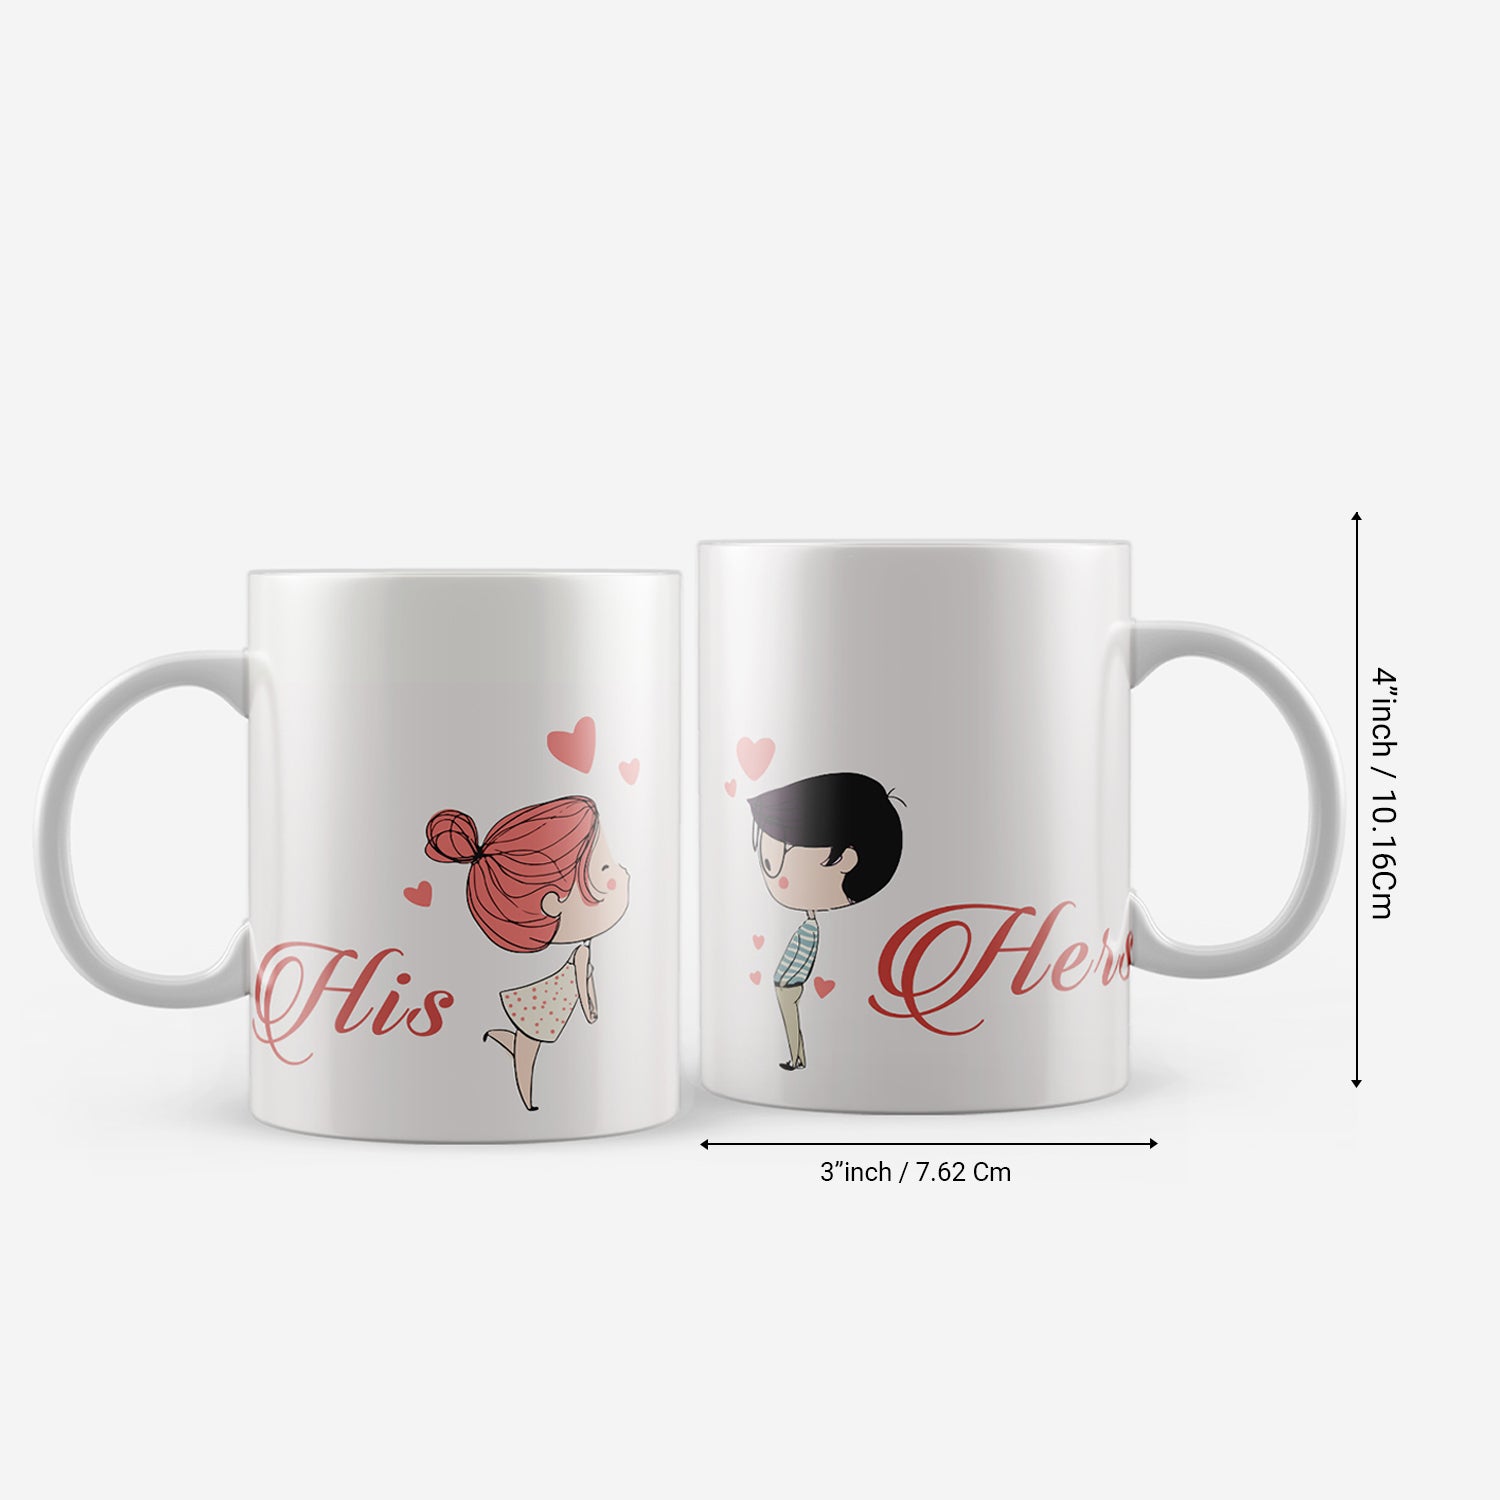 Set of 2 "His - Her" Valentine Love theme Ceramic Coffee Mugs 3